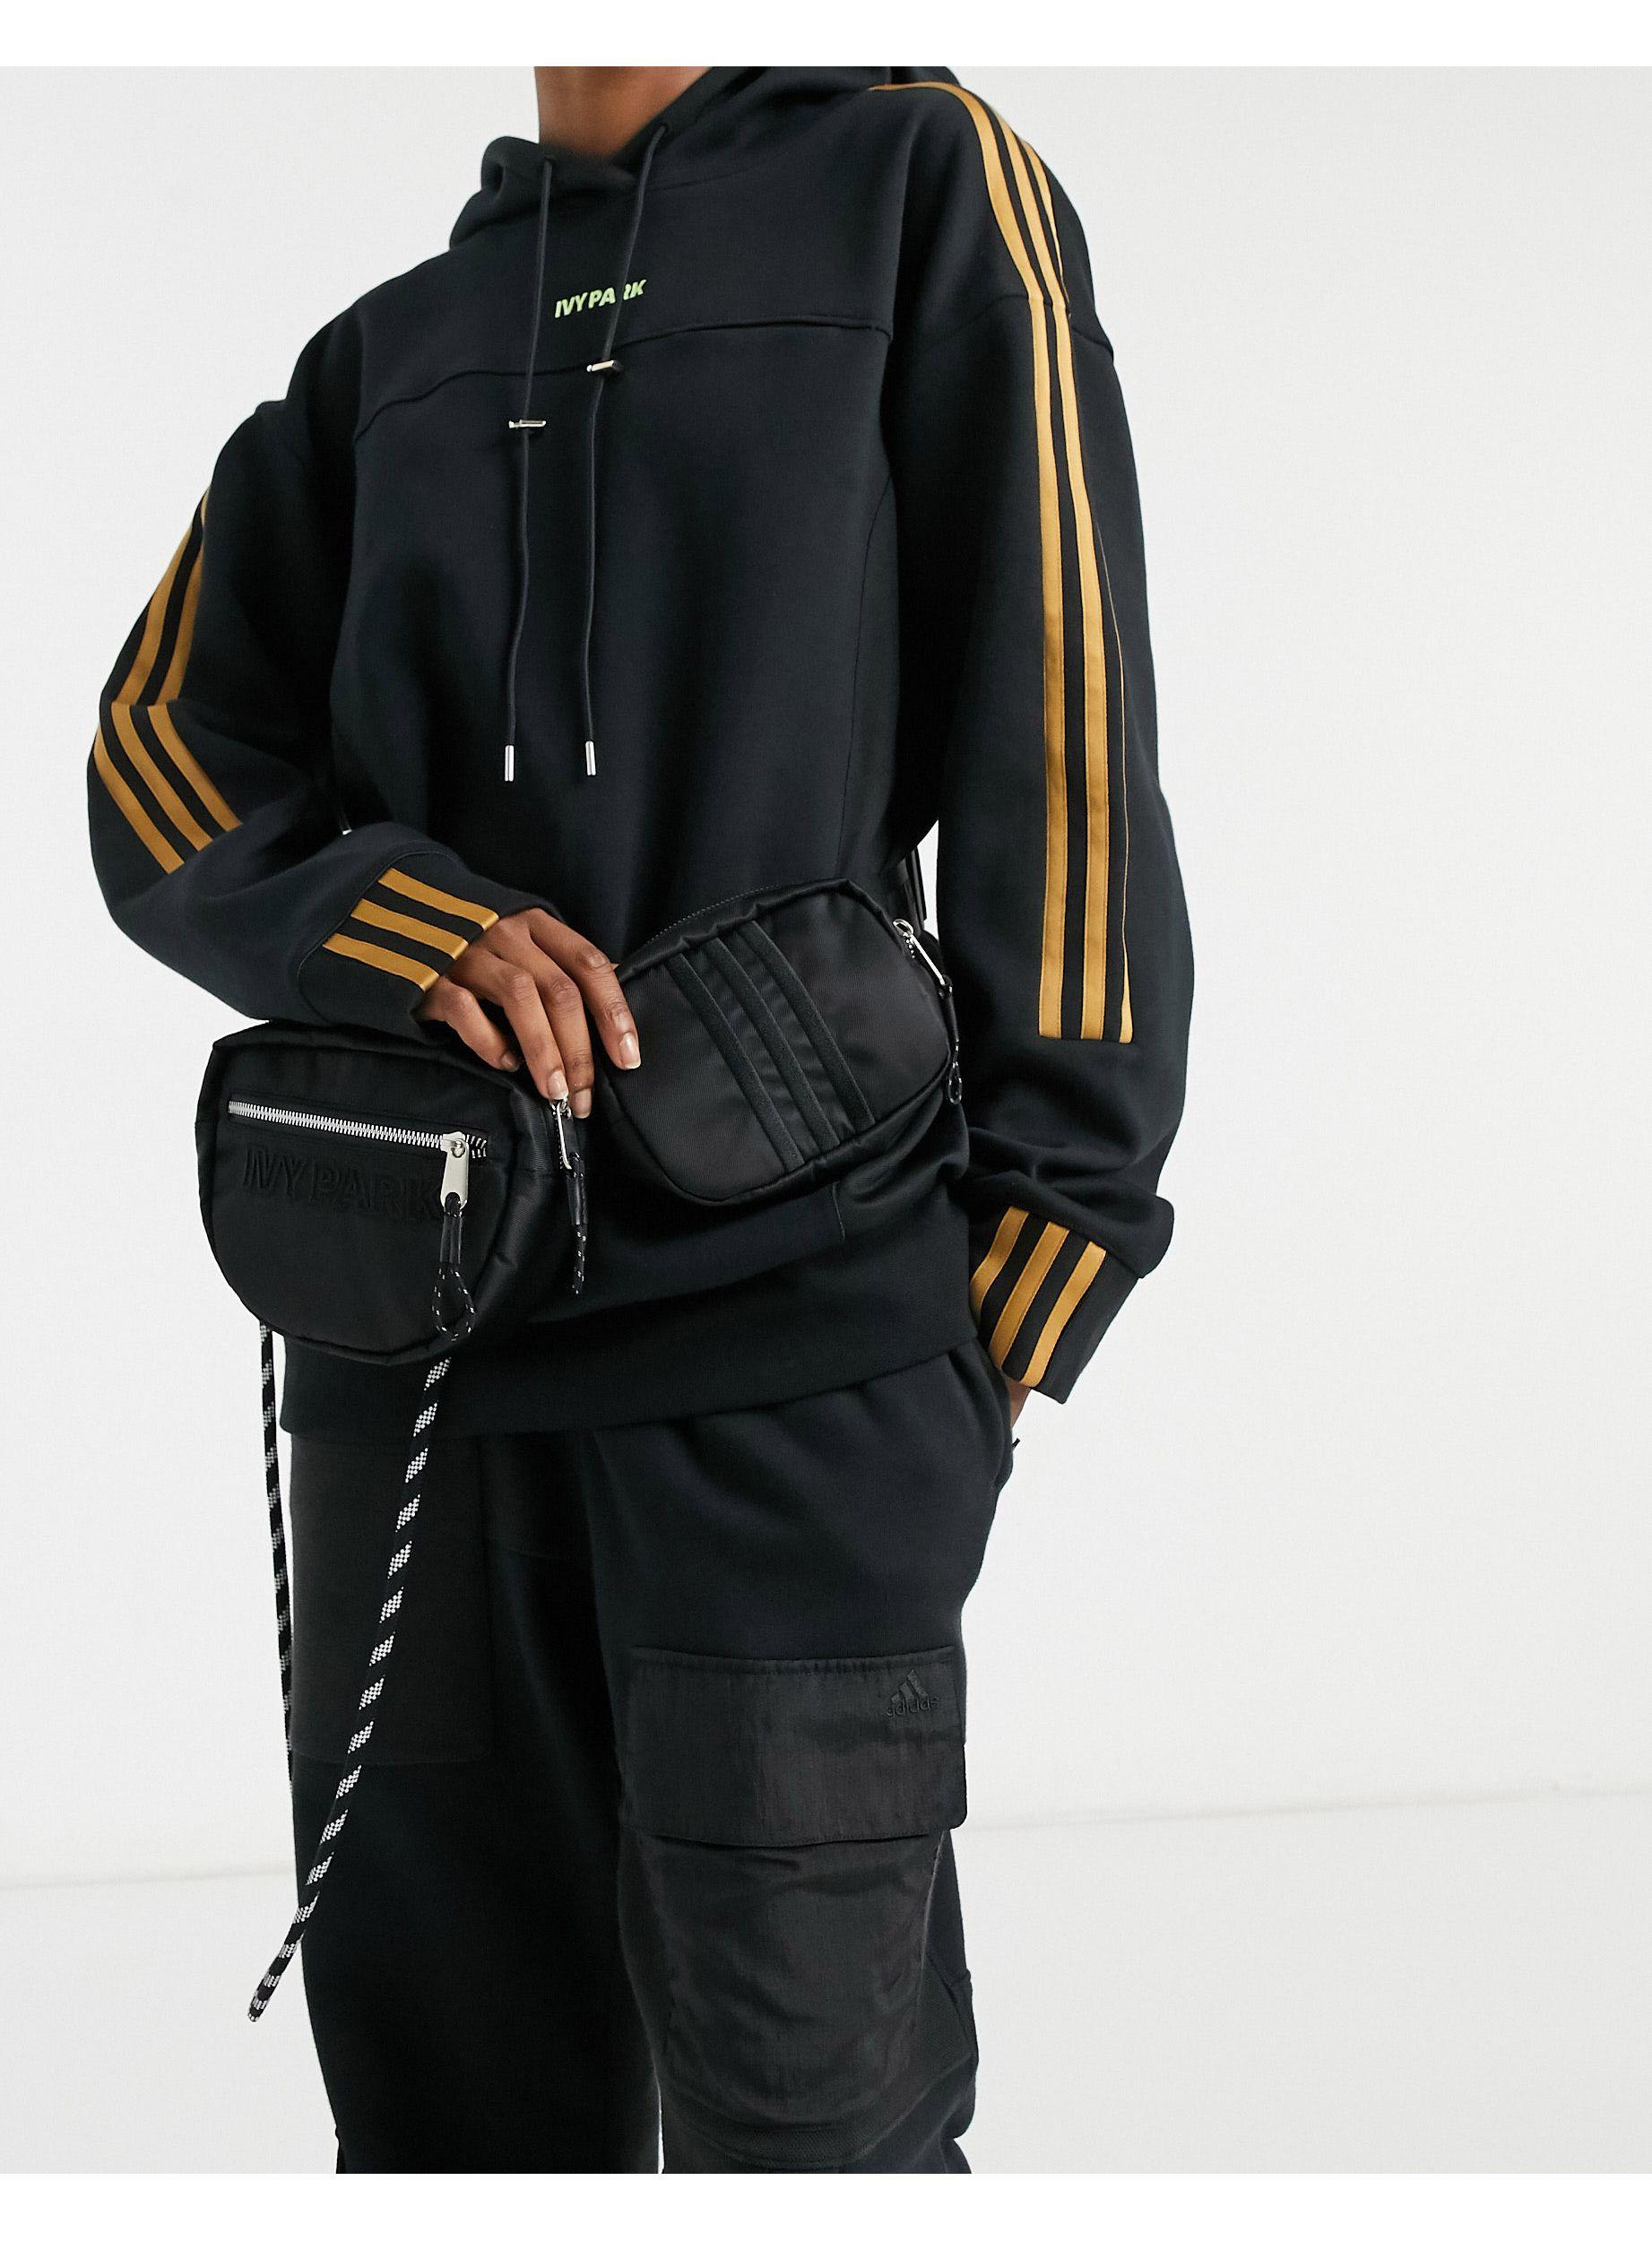 Ivy Park Adidas X Belt Bum Bag in Black | Lyst